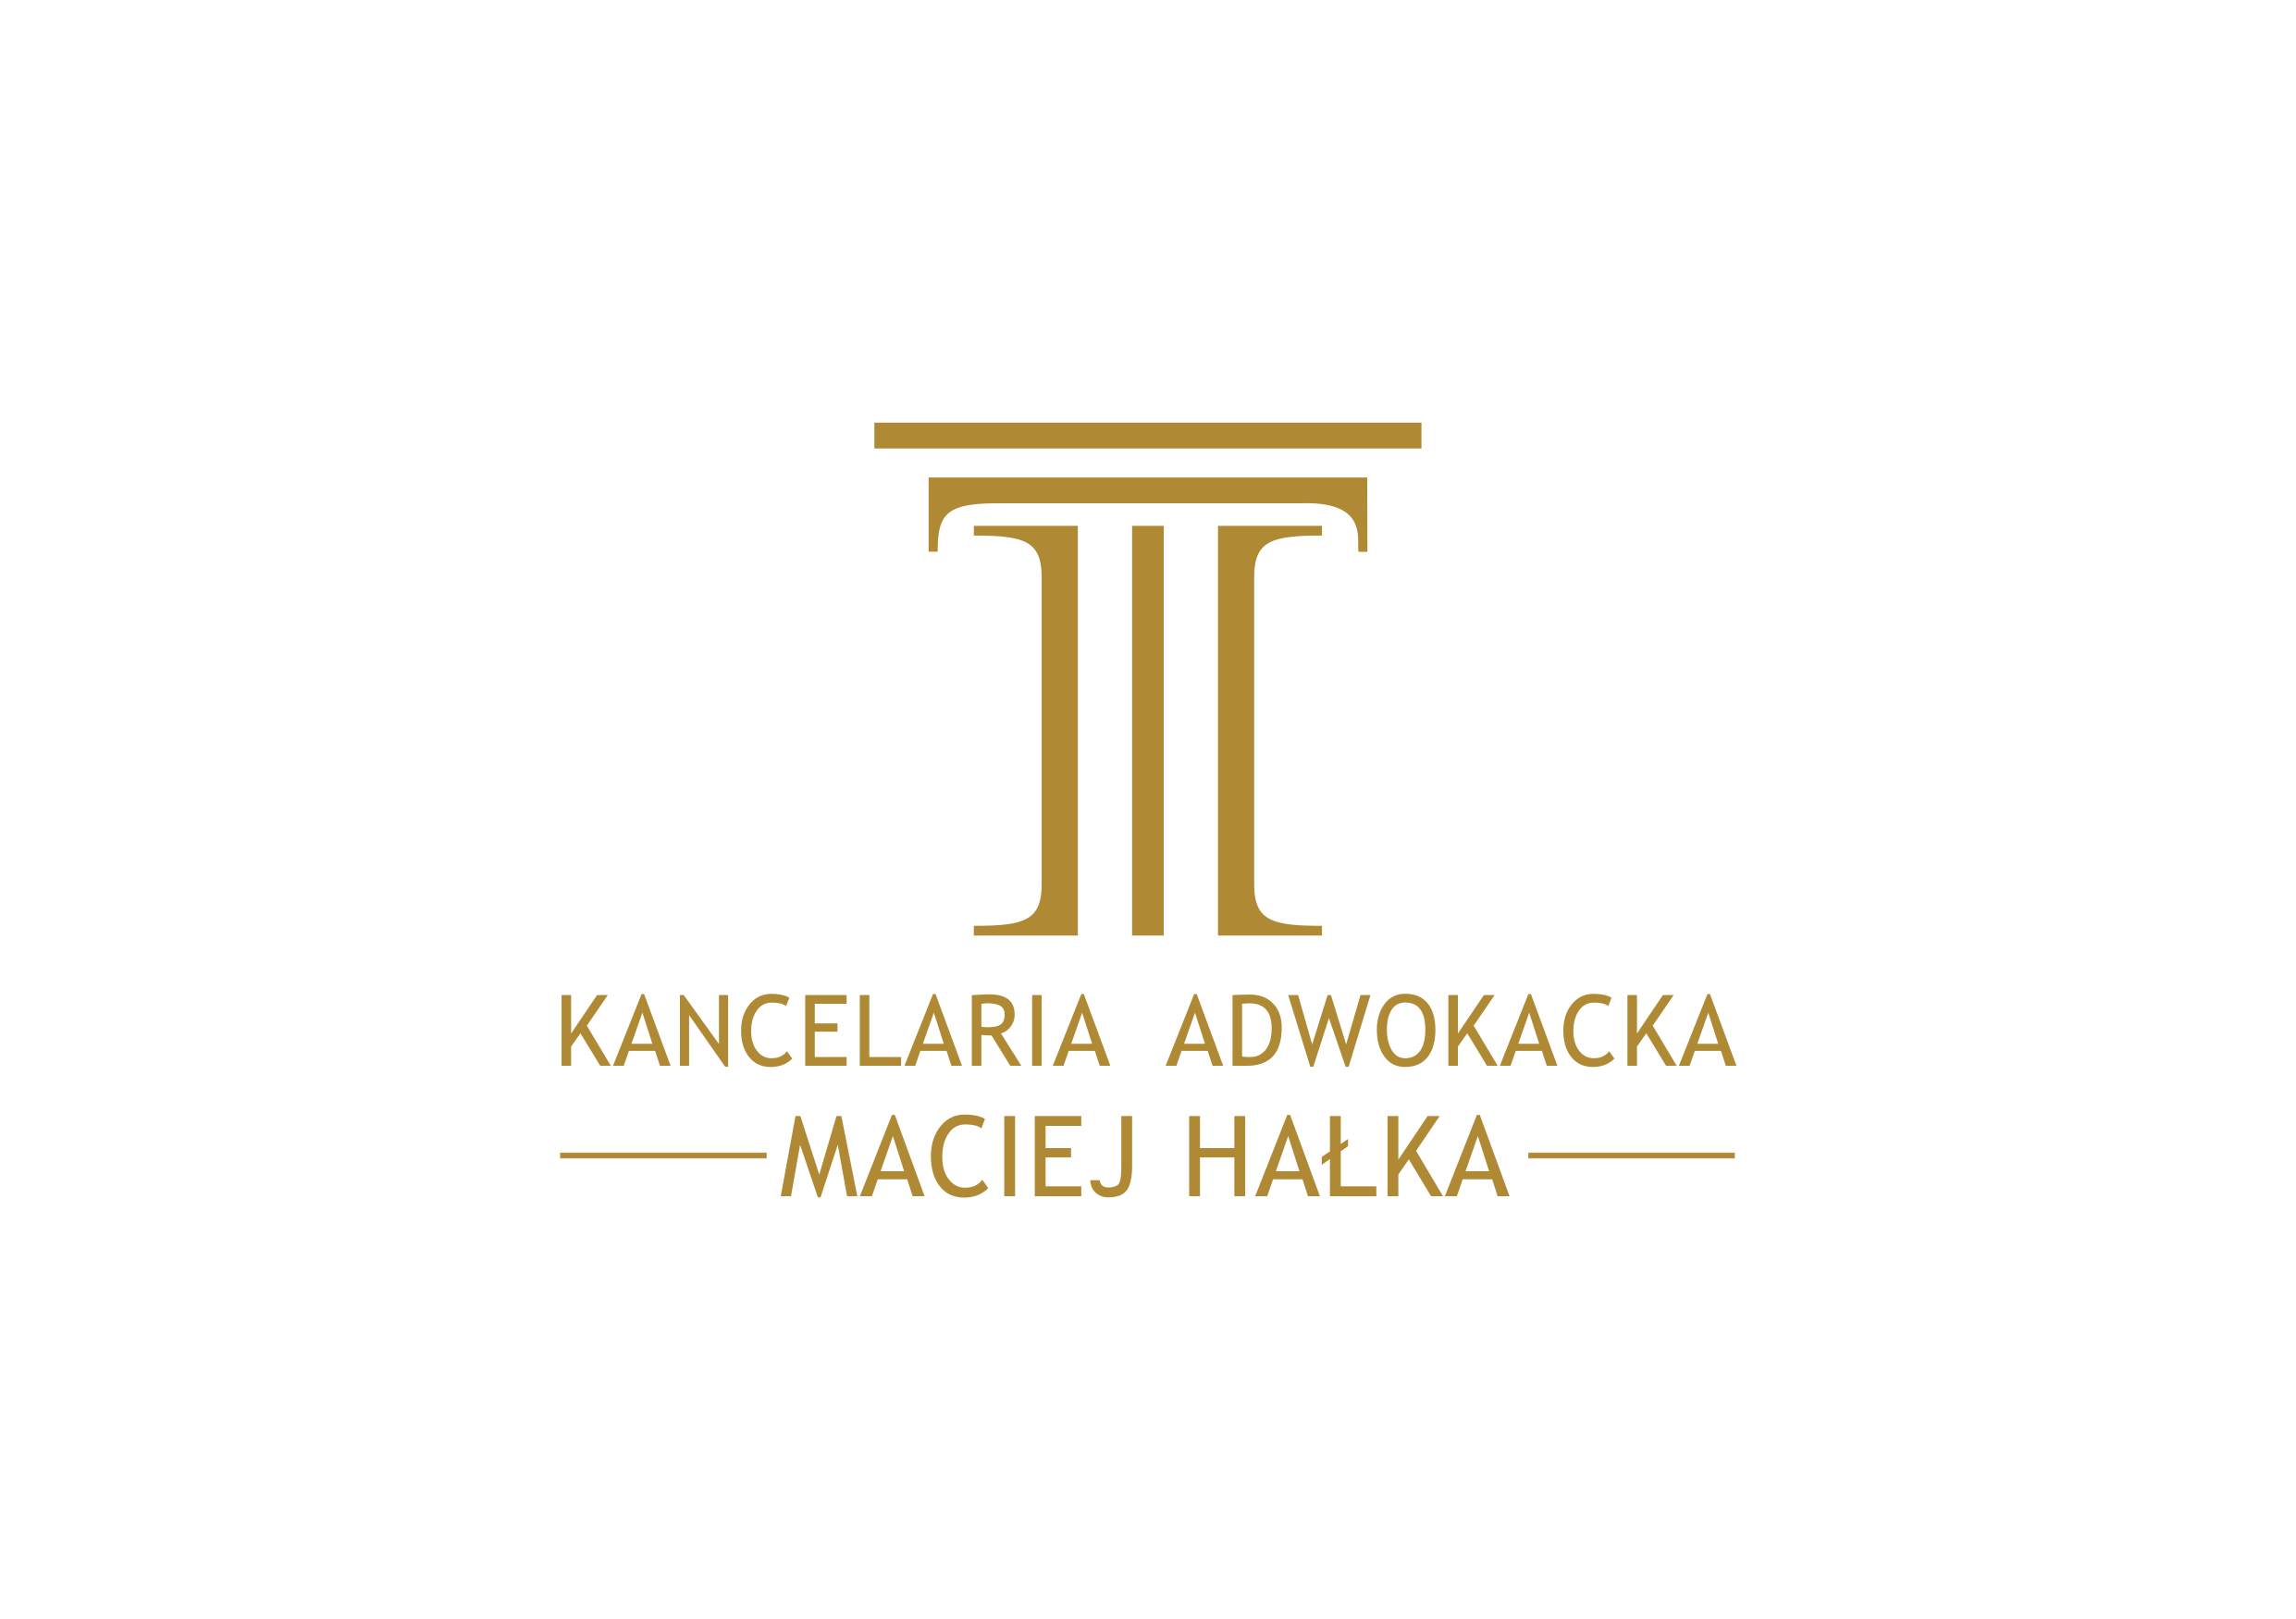 Kancelaria Adwokacka Maciej Hałka